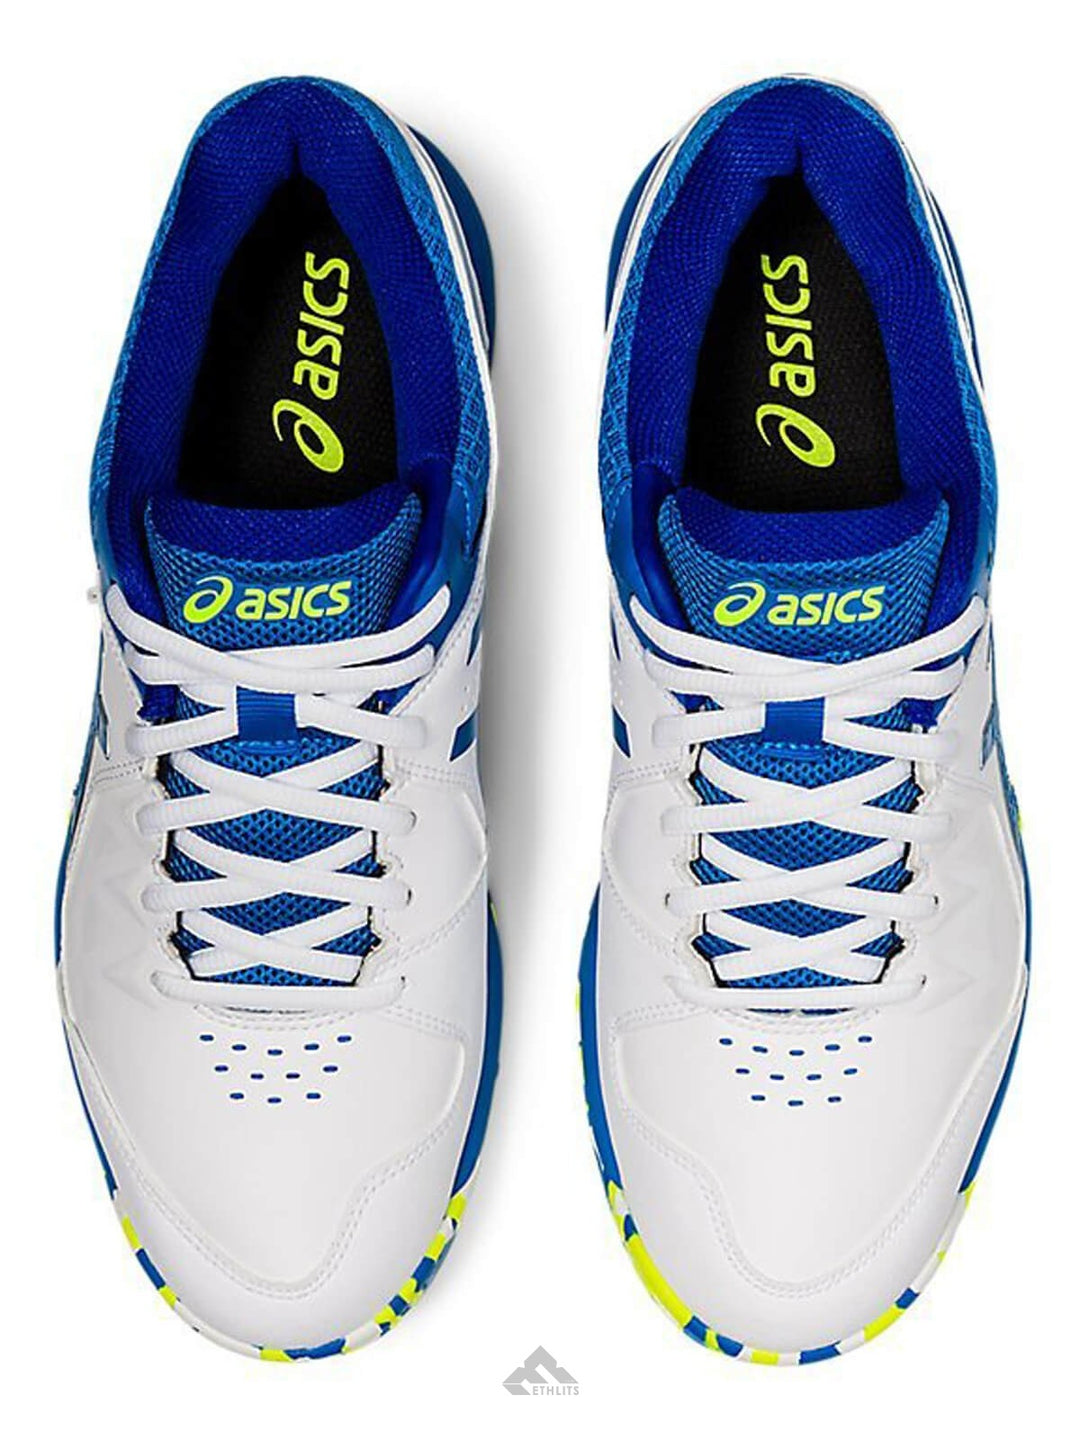 Gel Peake Asics Men's Cricket Shoes